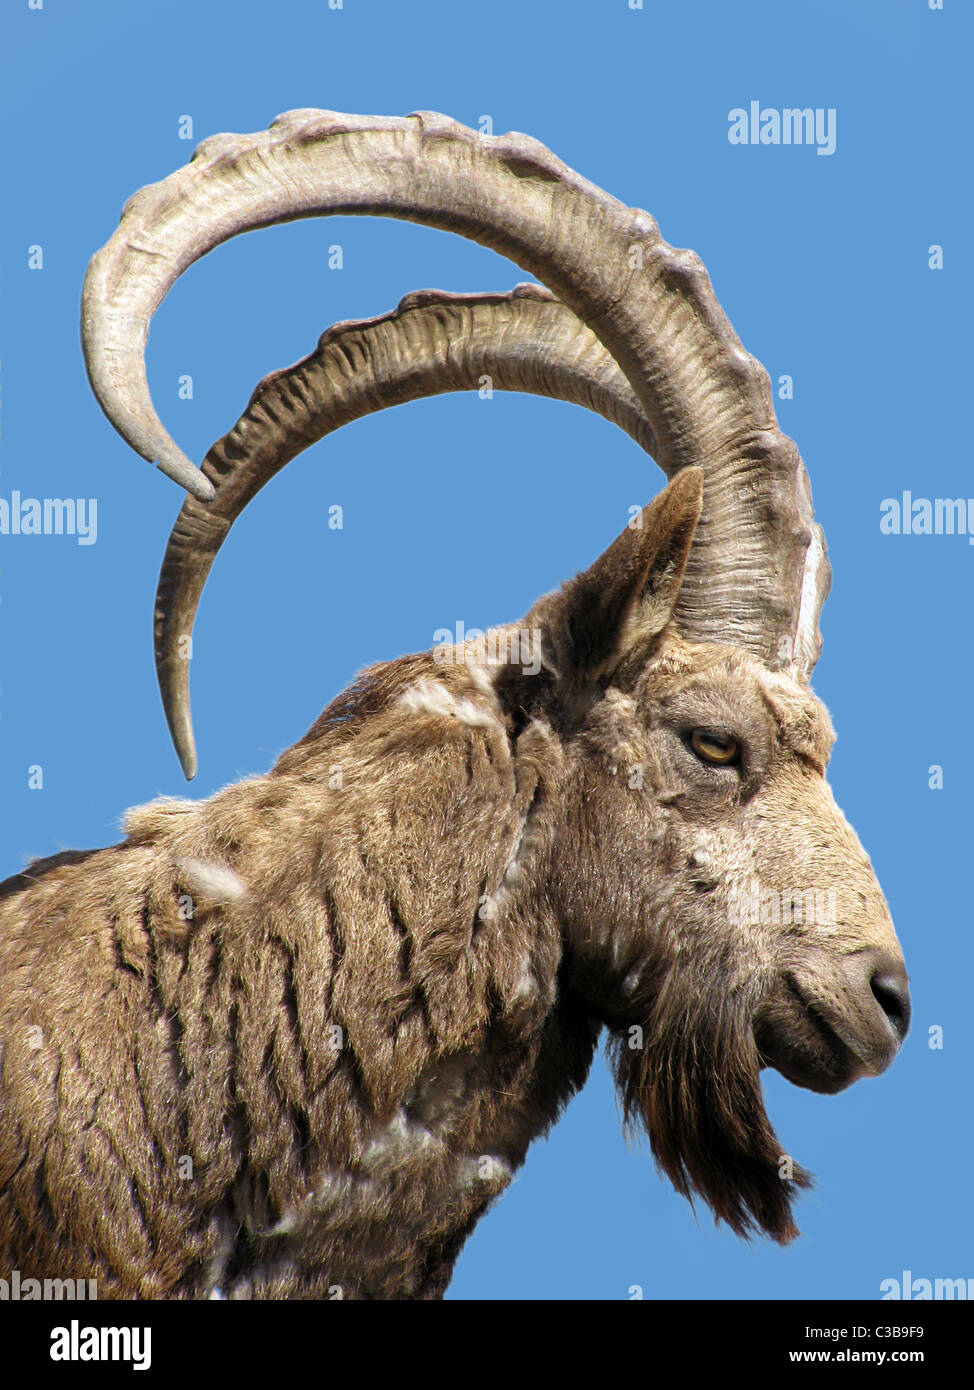 wild goat head over blue sky Stock Photo